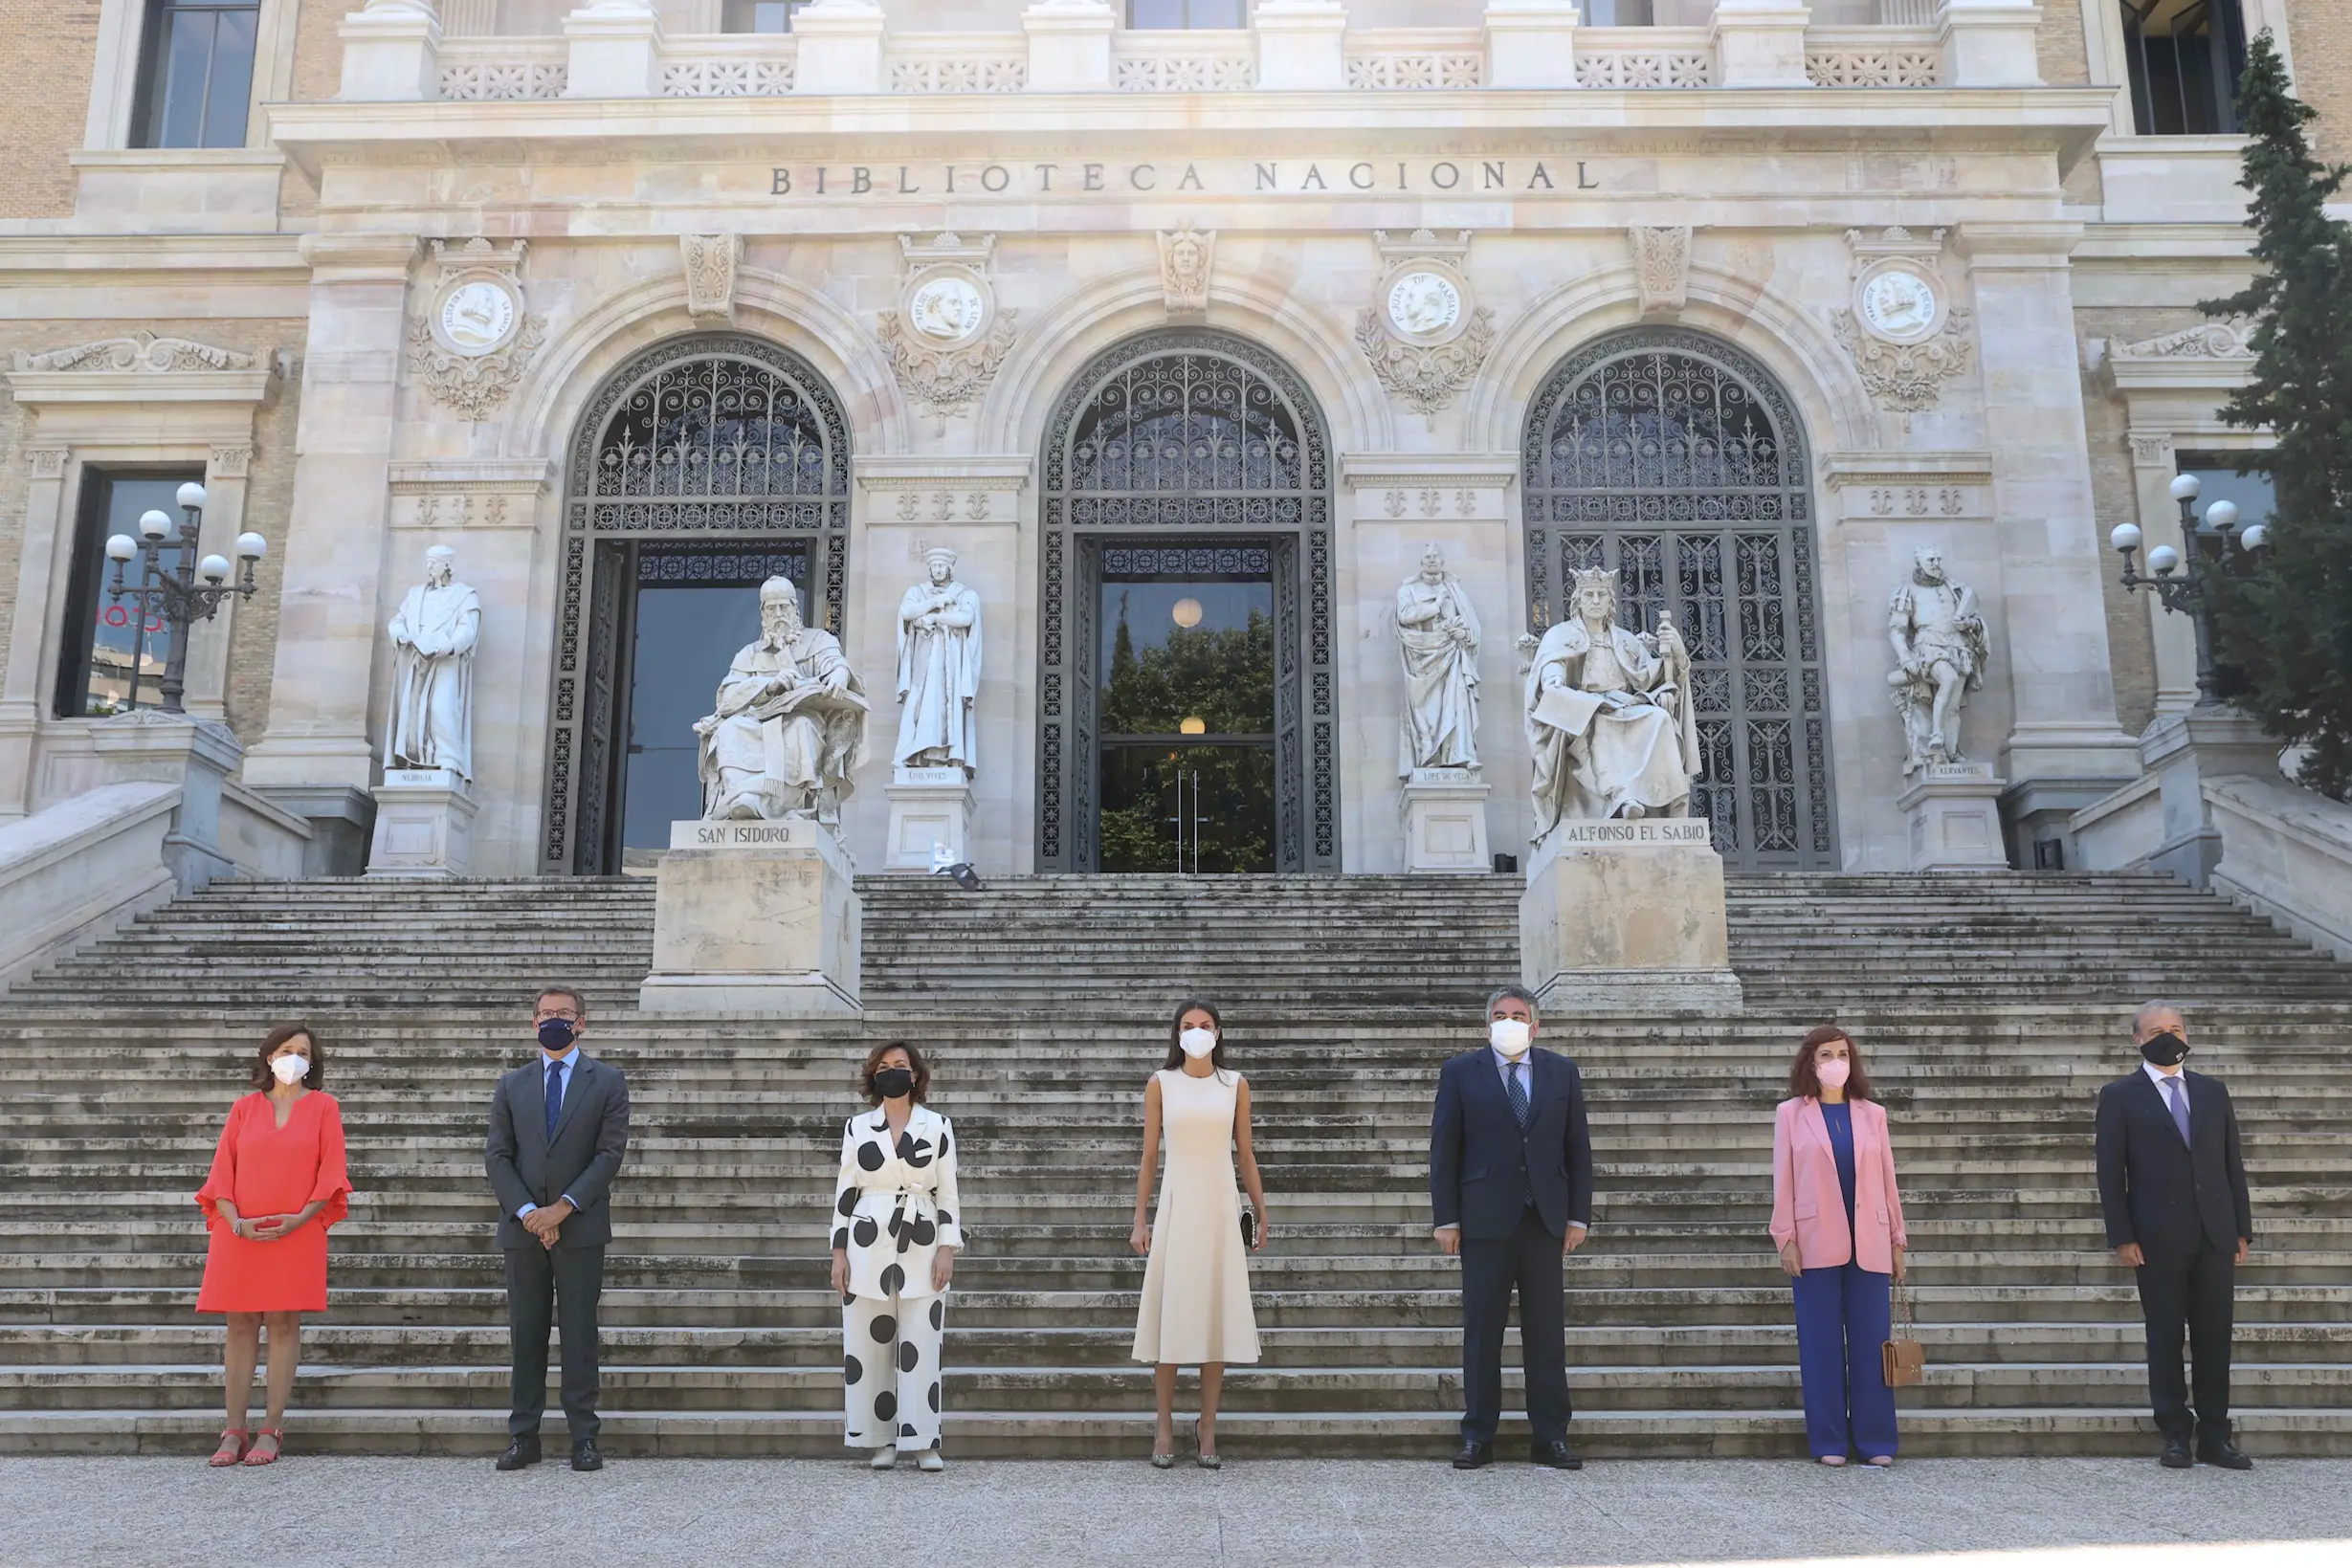 Queen Letizia brought back familiar elegance to Artistic Exhibition